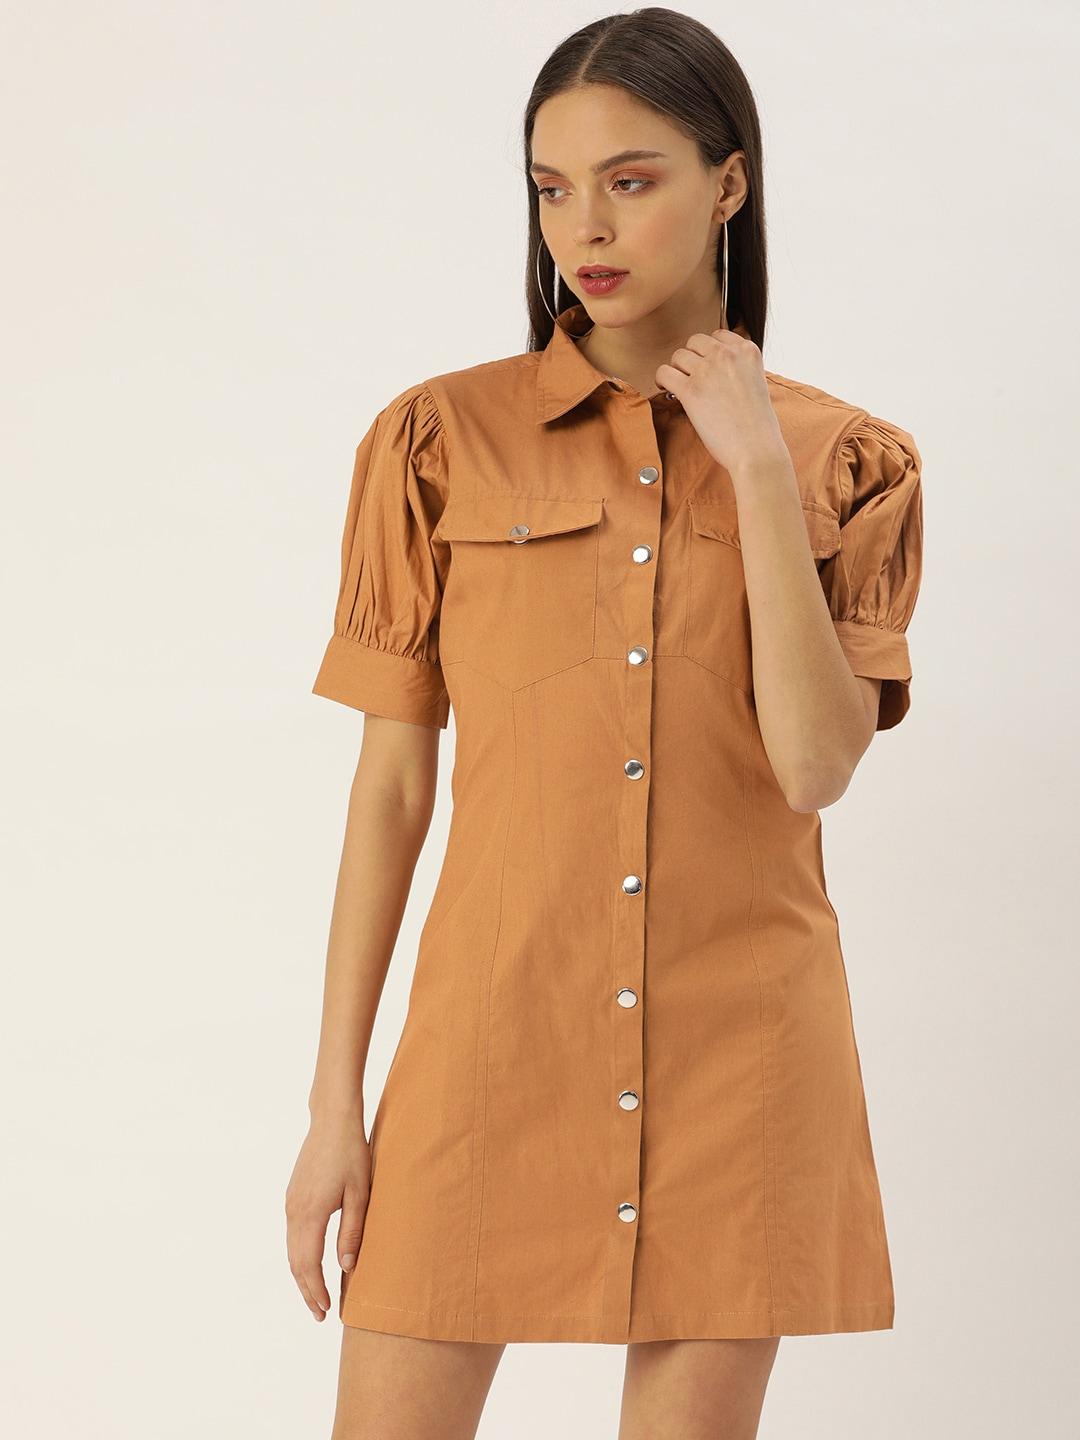 forever-21-tan-brown-solid-shirt-collar-puff-sleeves-pockets-detailing-shirt-mini-dress